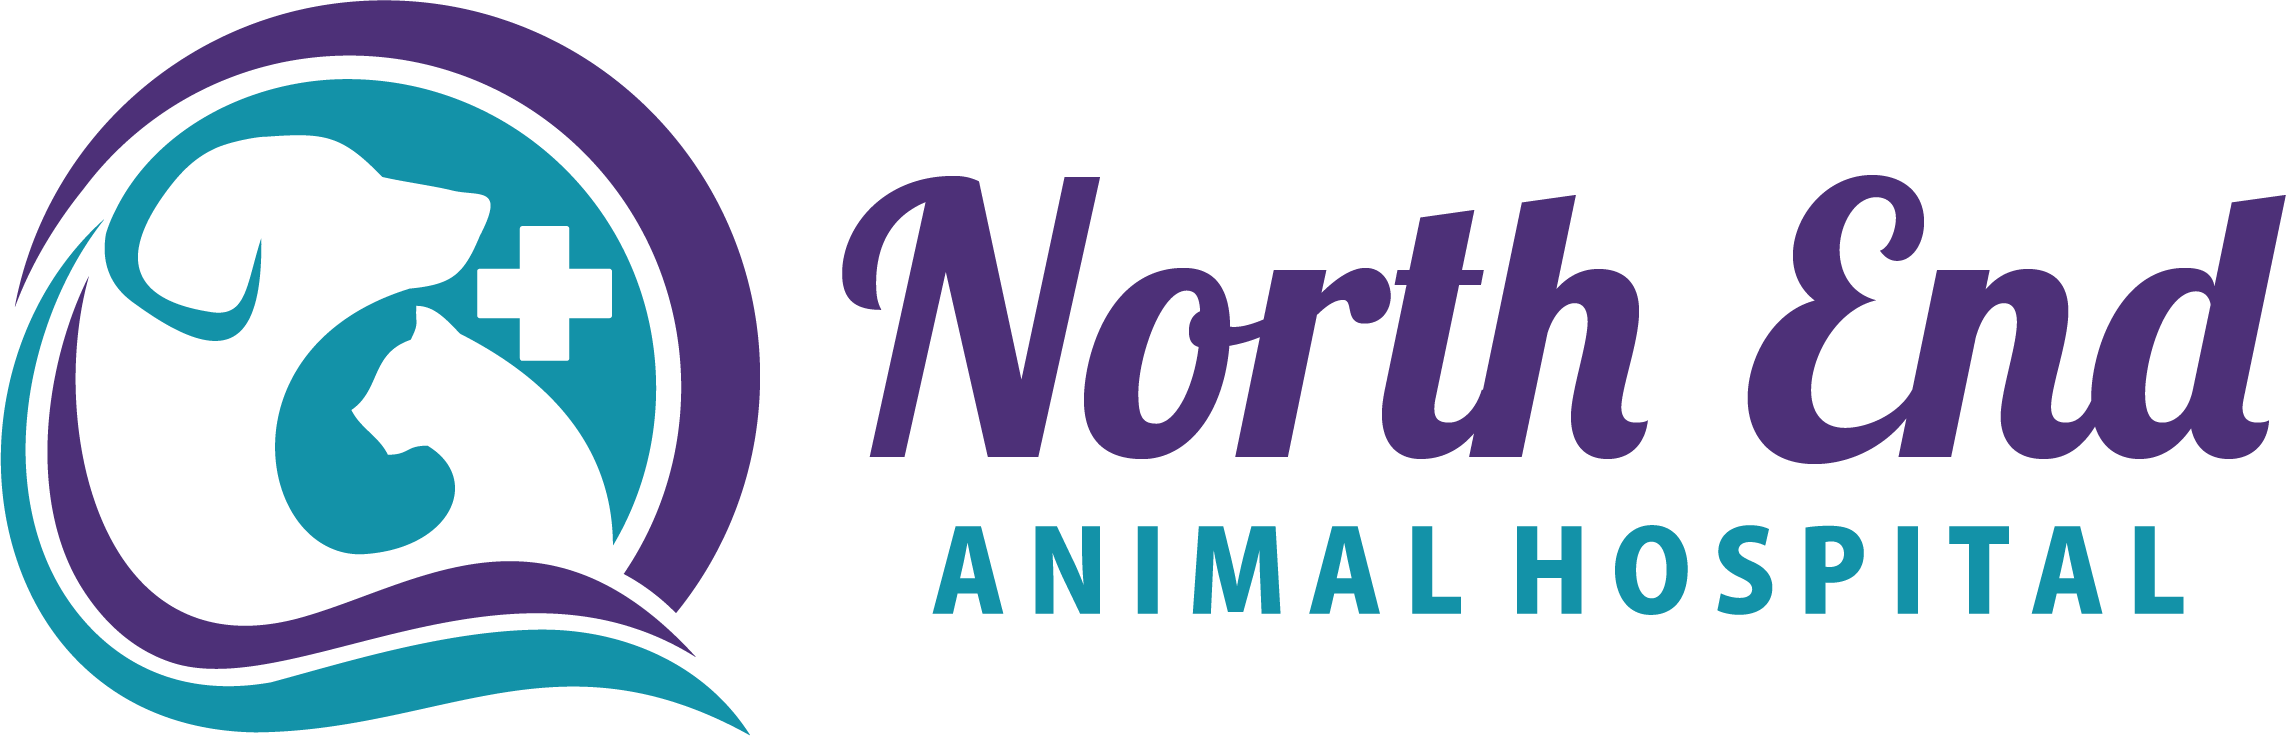 northland animal hospital email